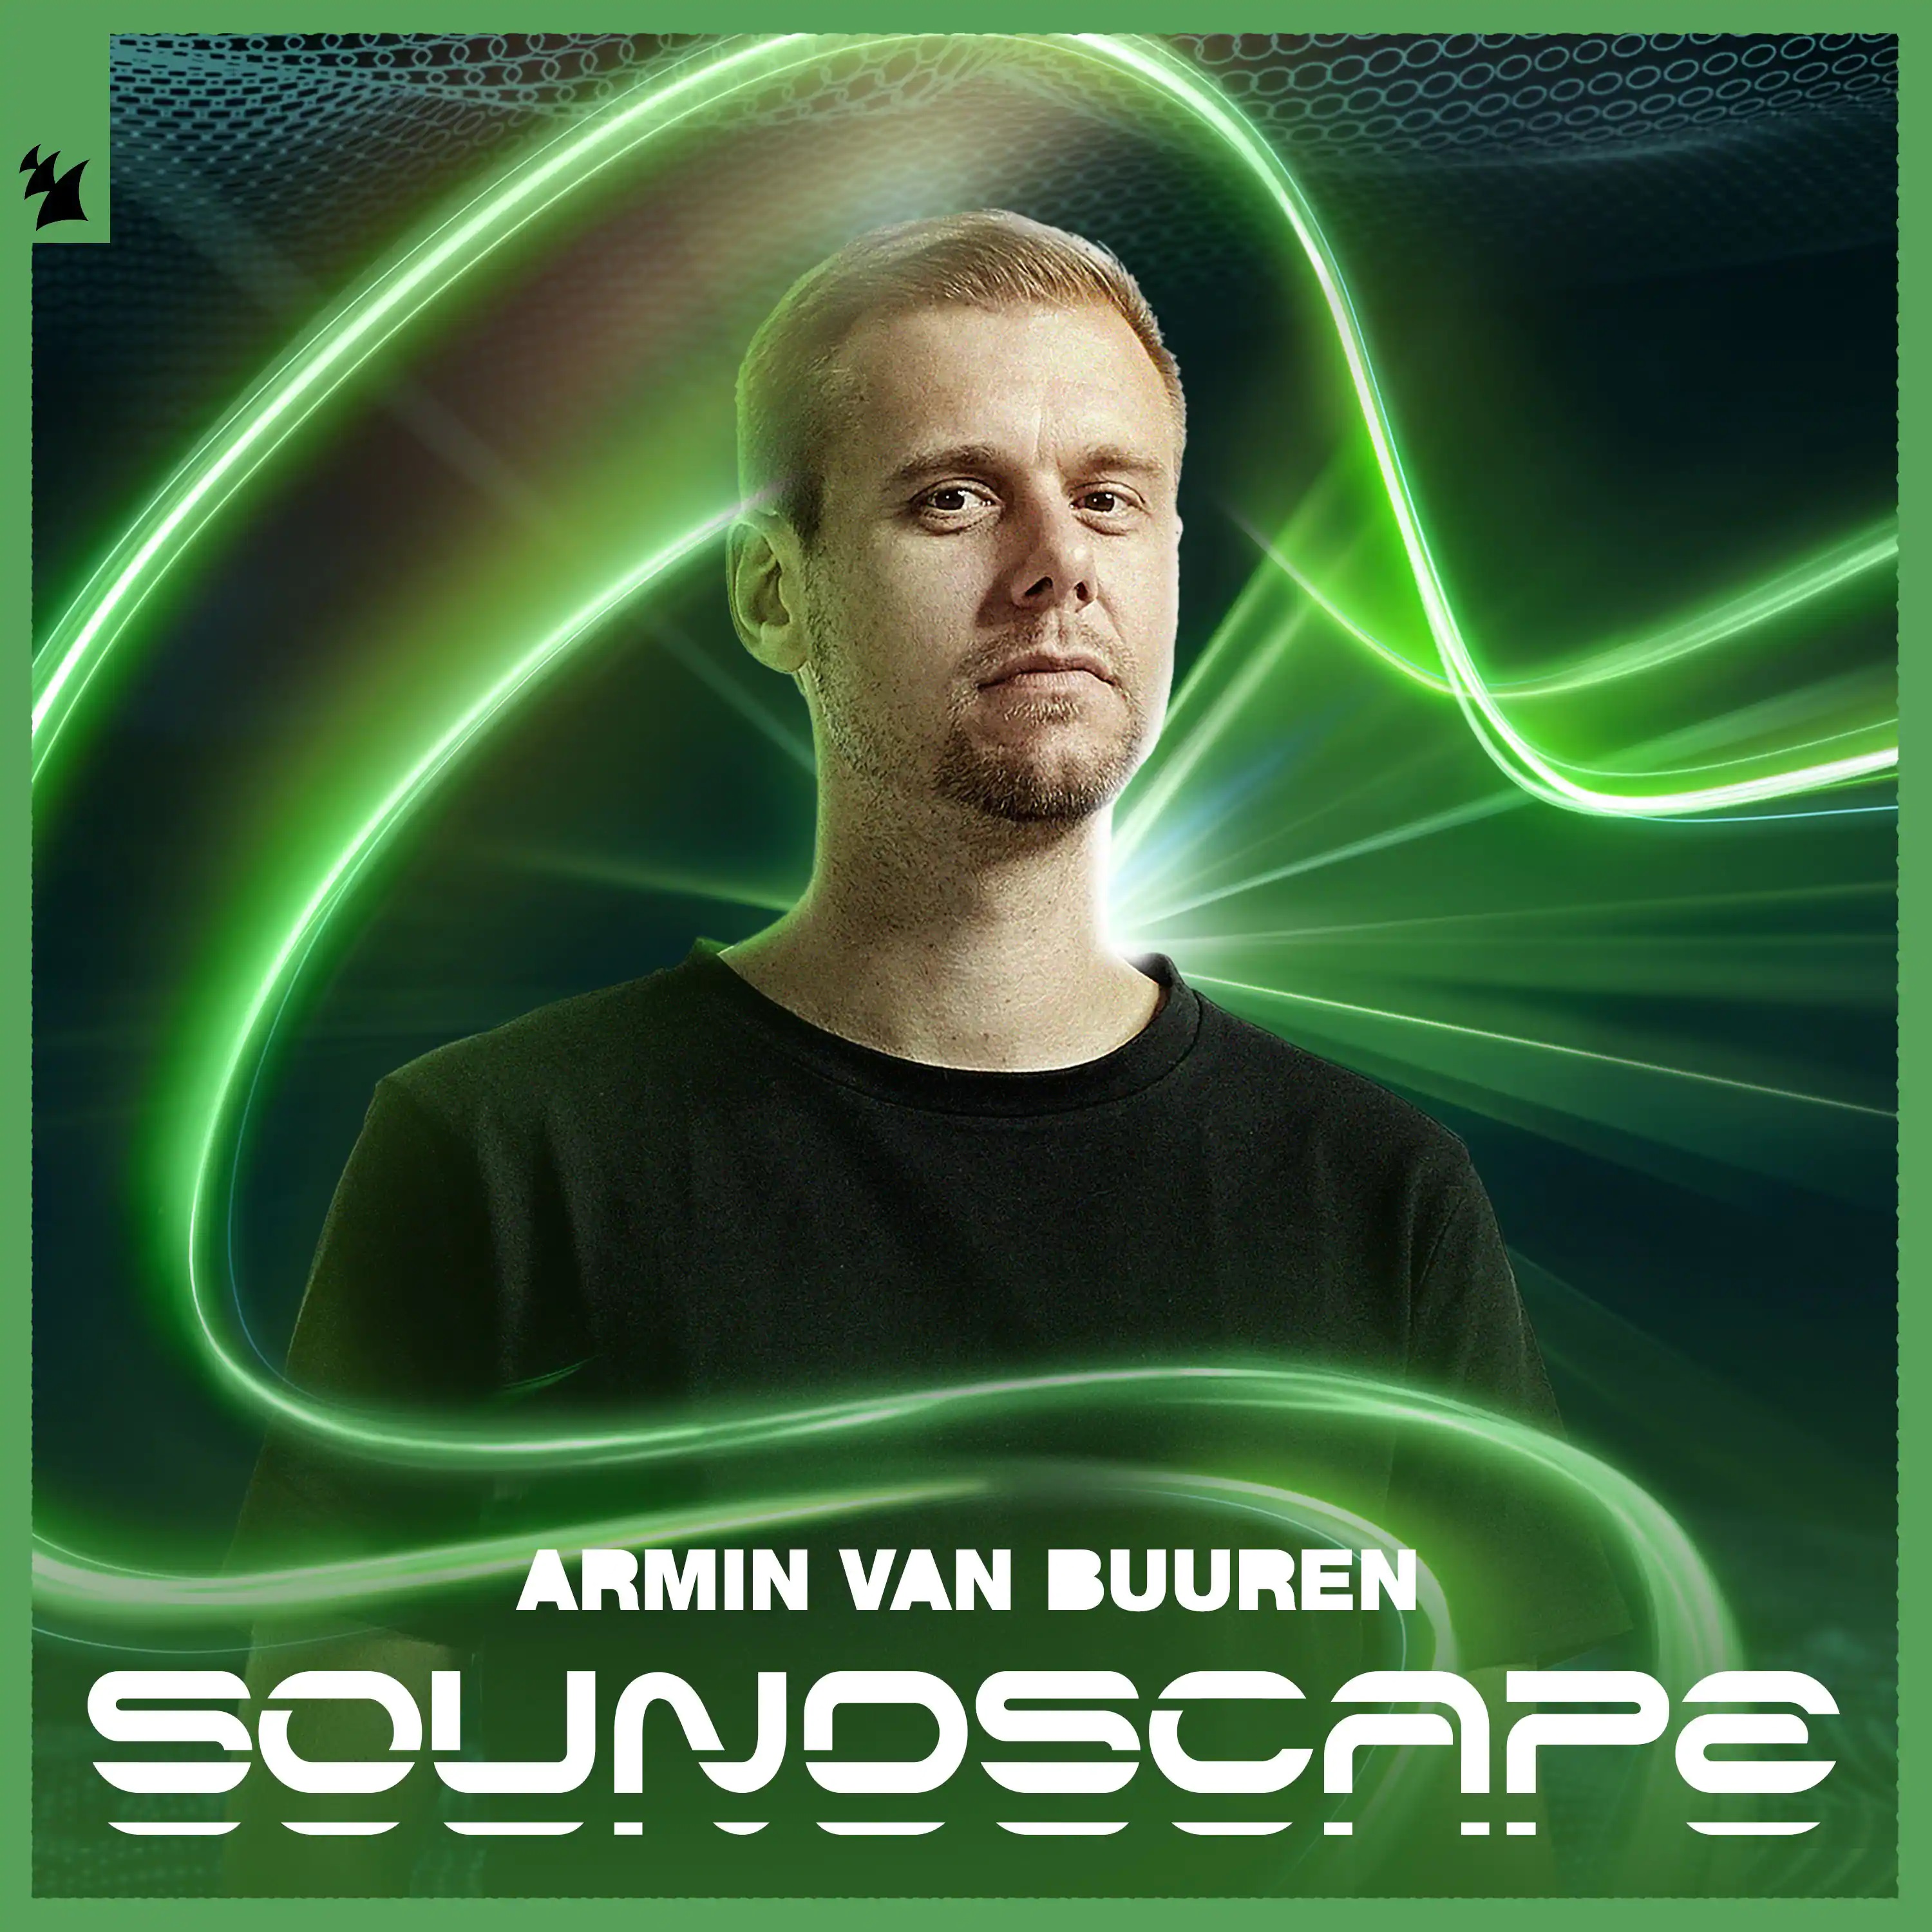 Armin van Buuren Soundscape cover artwork